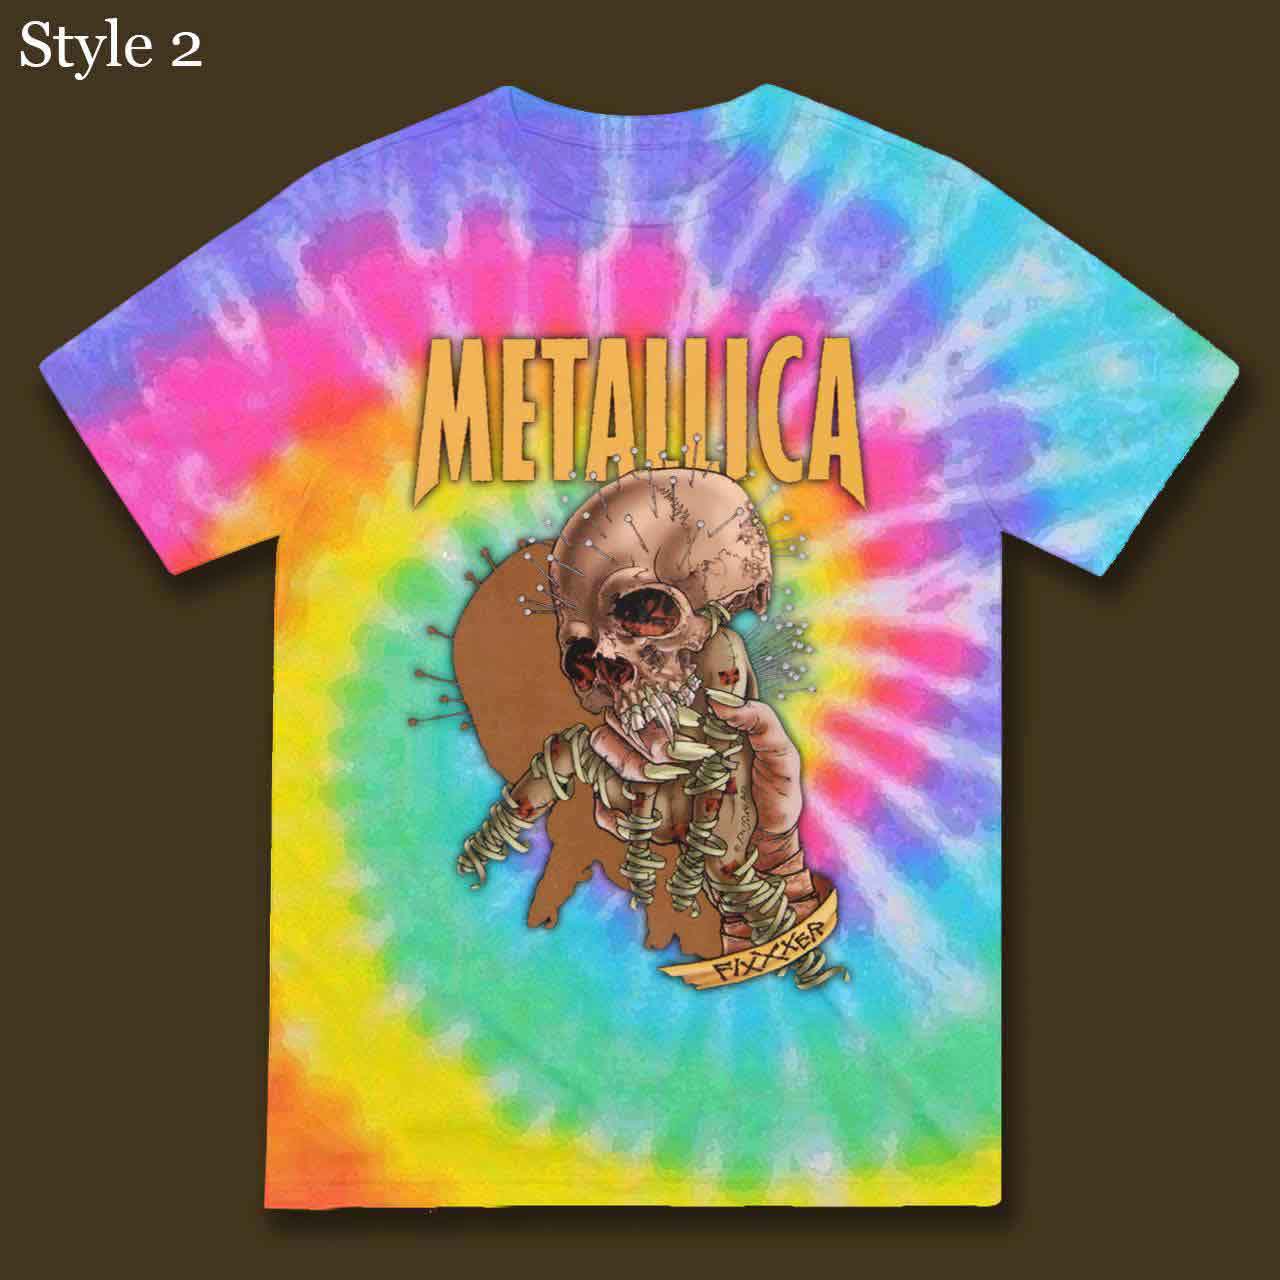 Metallica Fixxxer Vintage Shirt Tie Dye